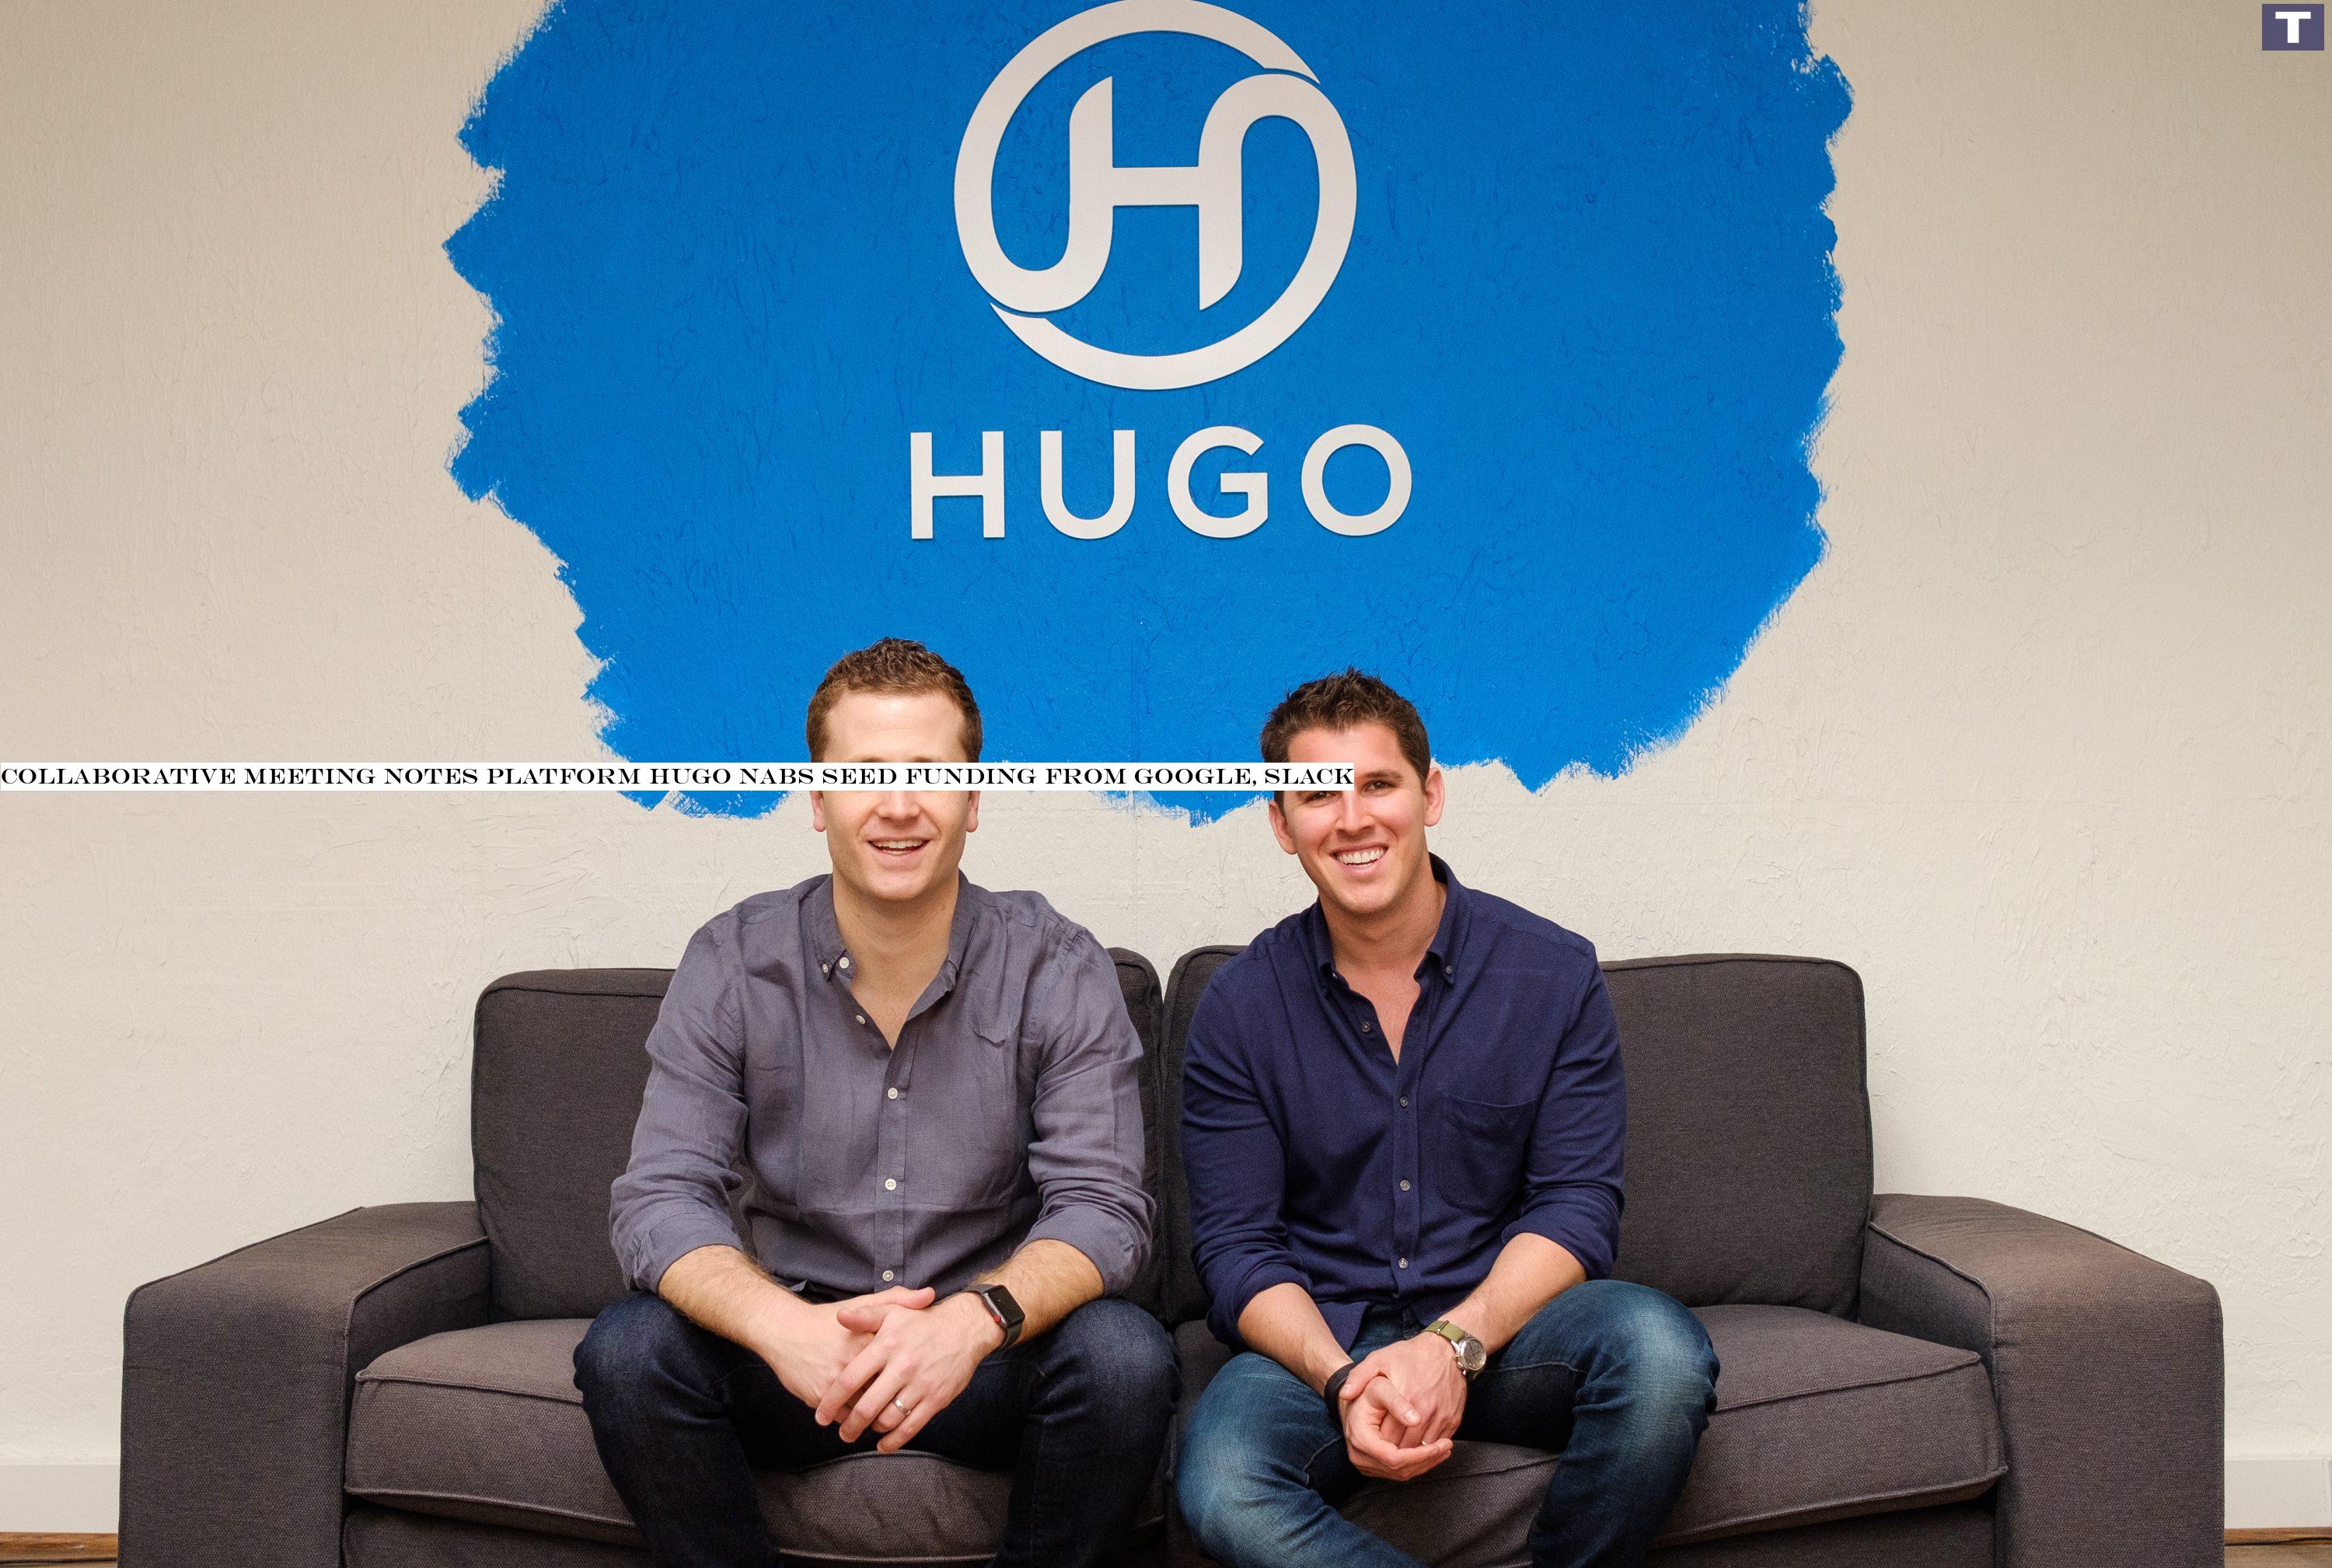 Collaborative meeting notes platform Hugo nabs seed funding from Google, Slack